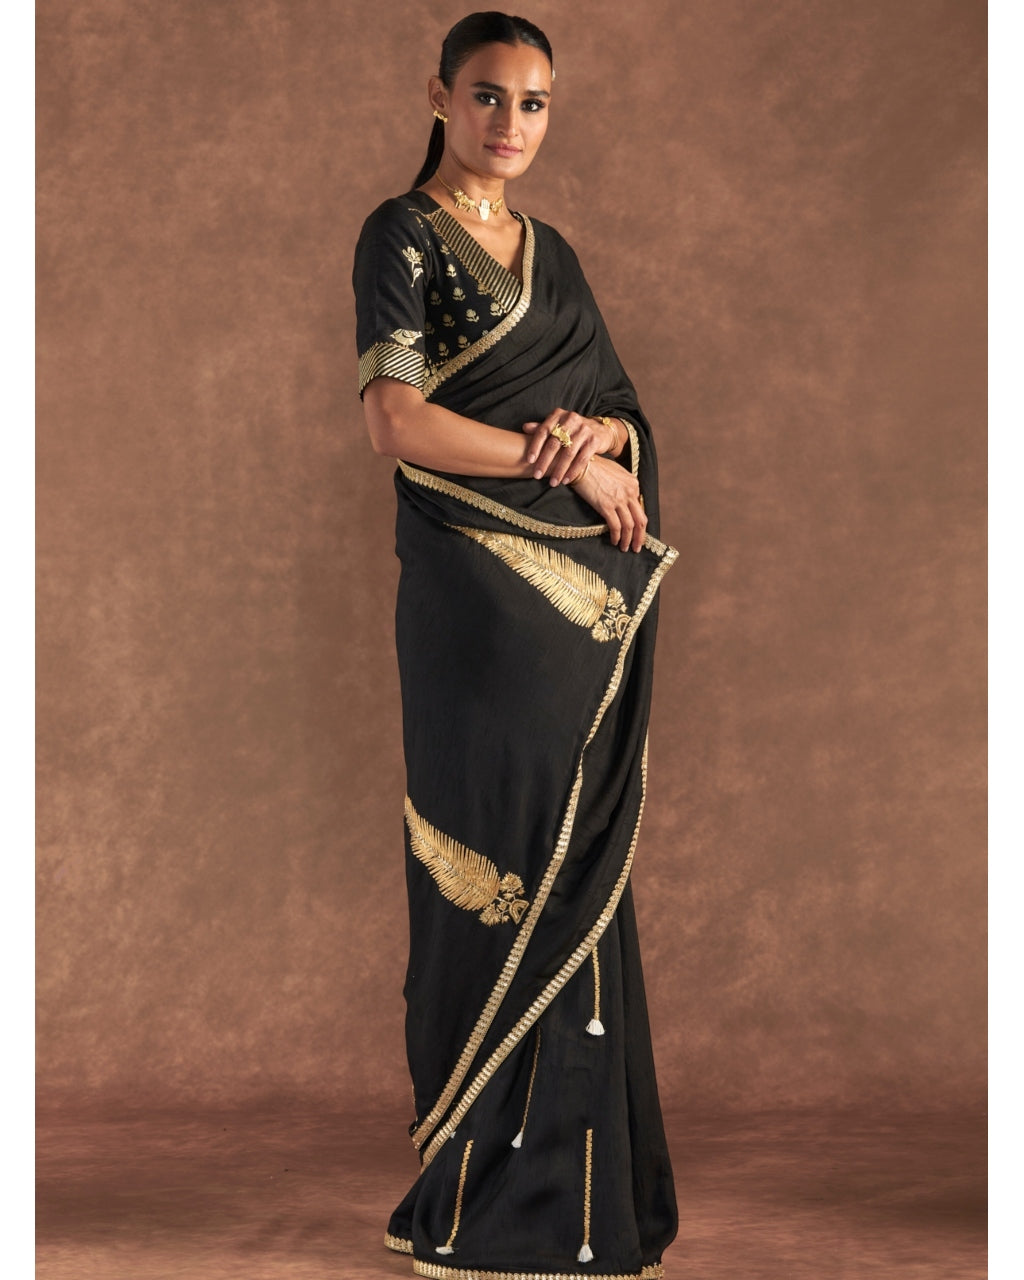 Black 'Paan-Patti' Sari